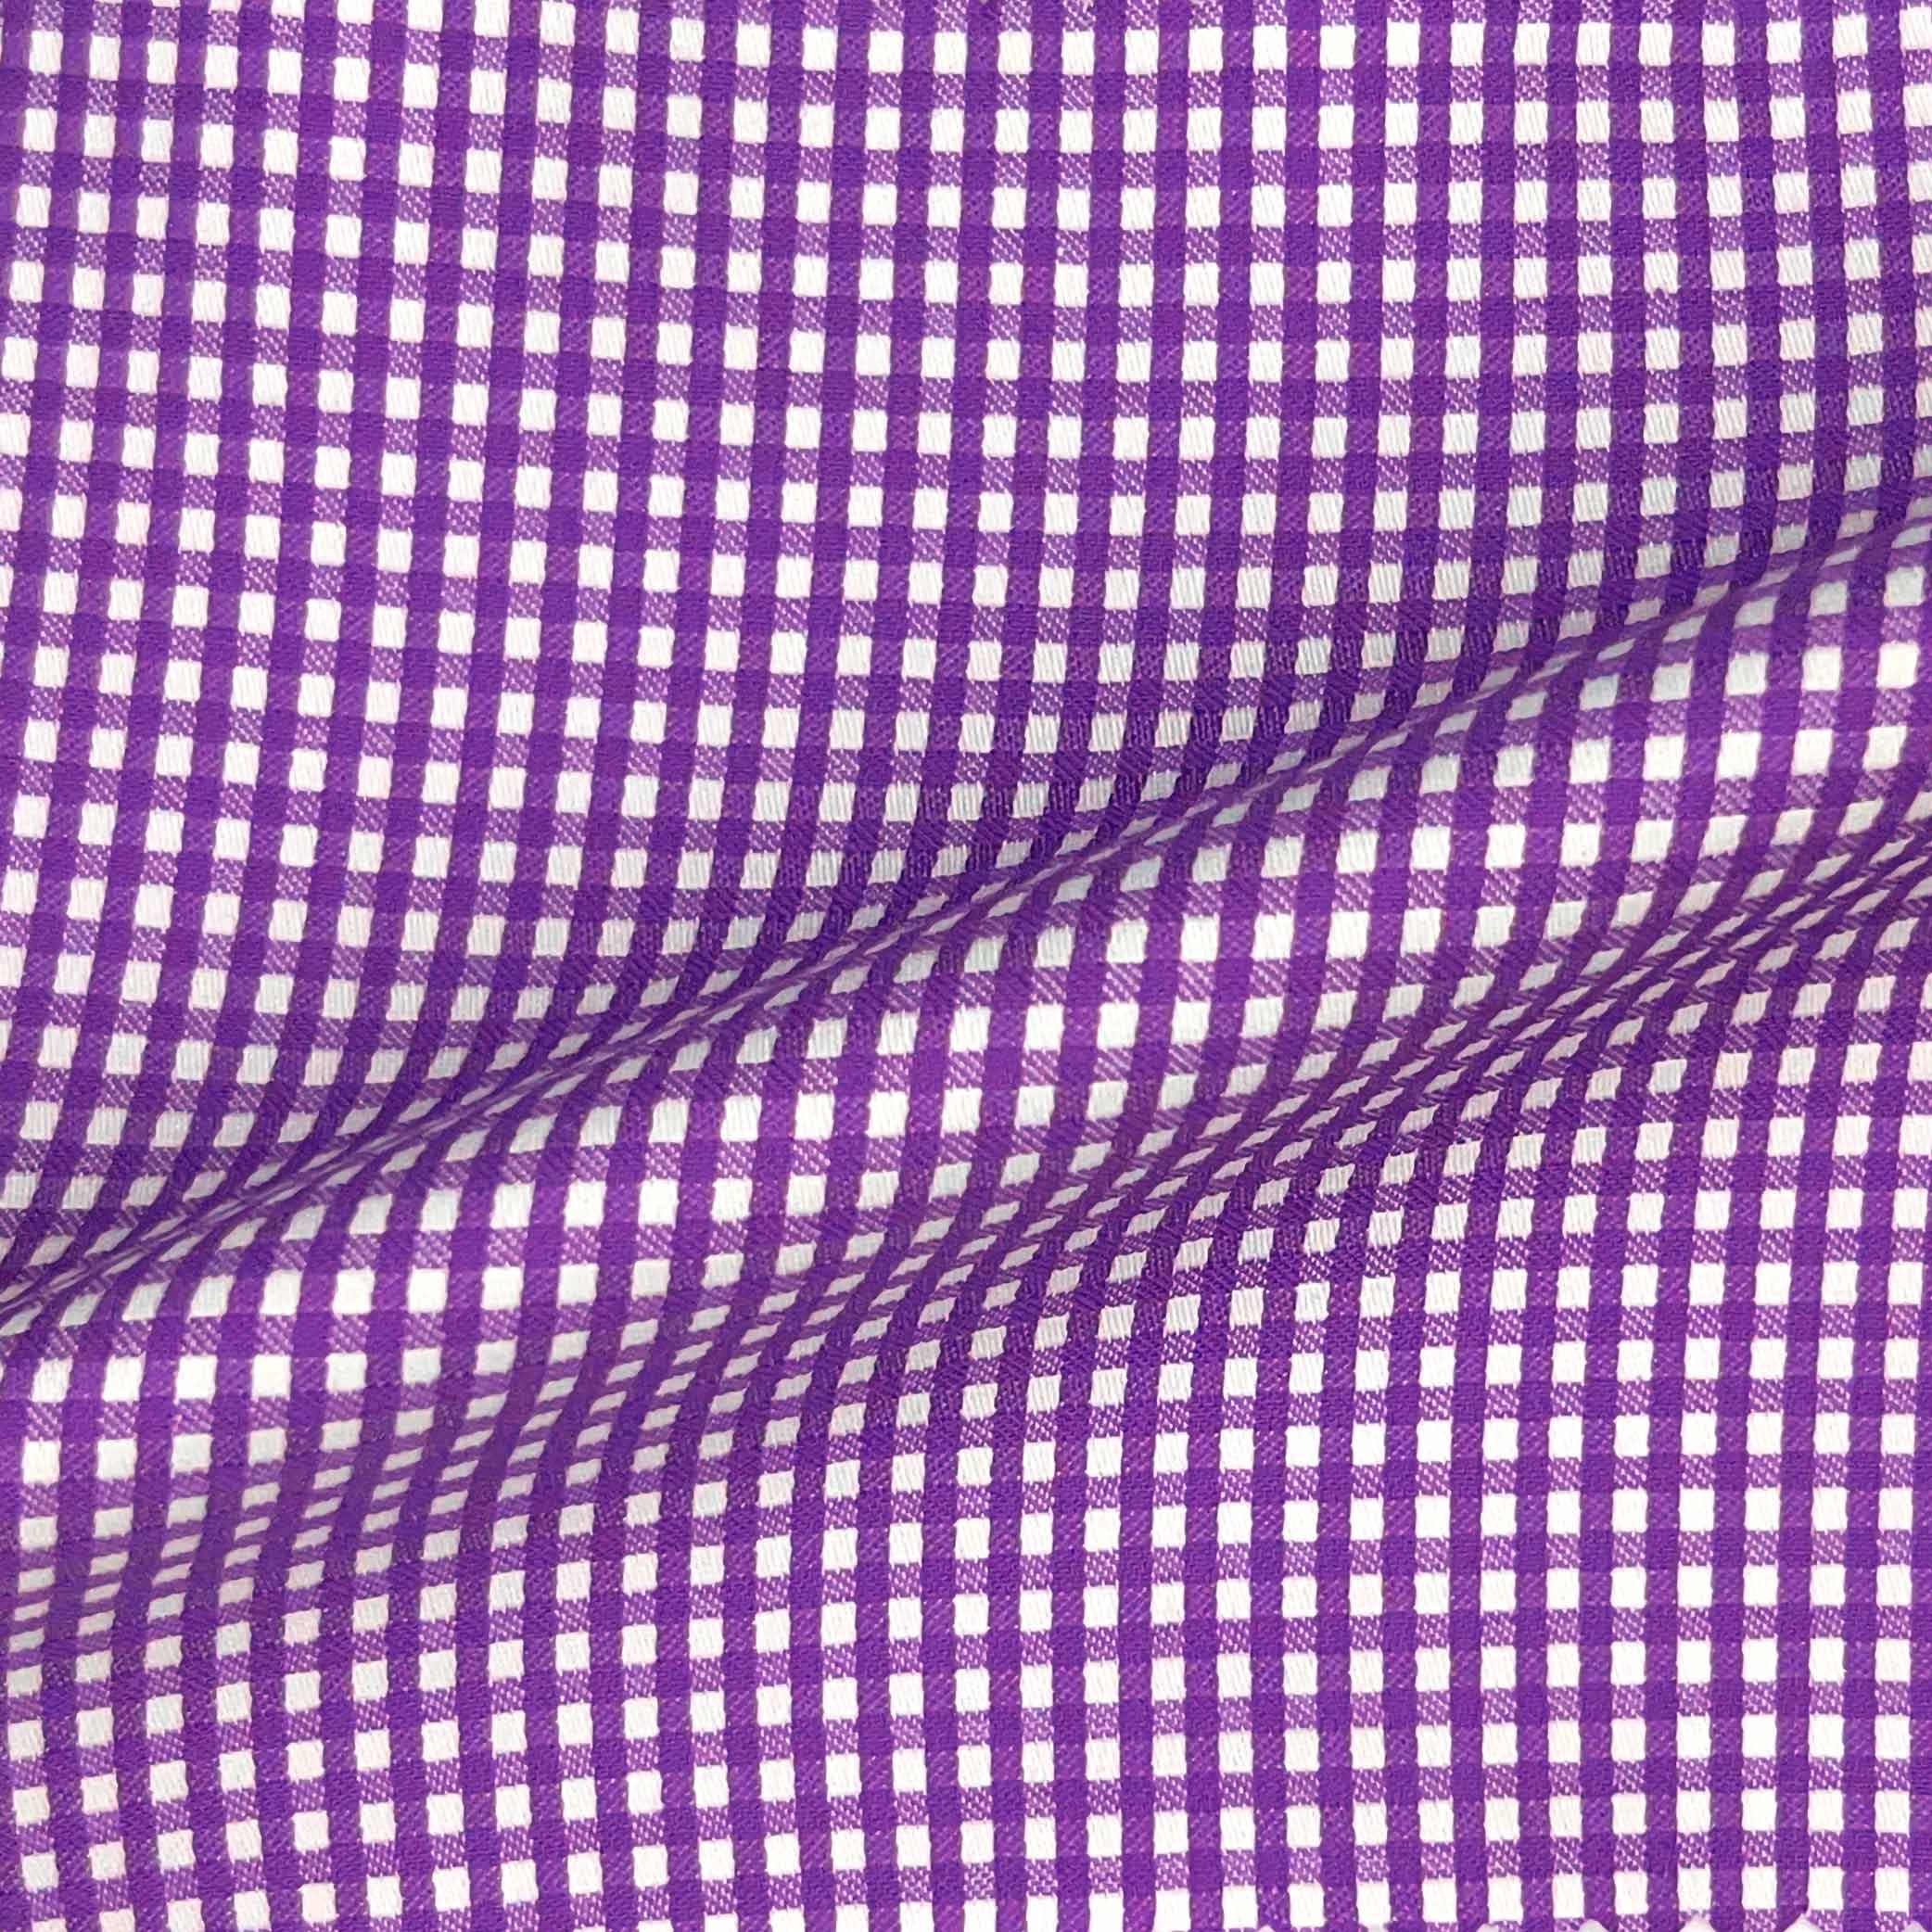 Purple Mini Gingham Check Giza 45 Egyptian Cotton Dress Shirt Cloth